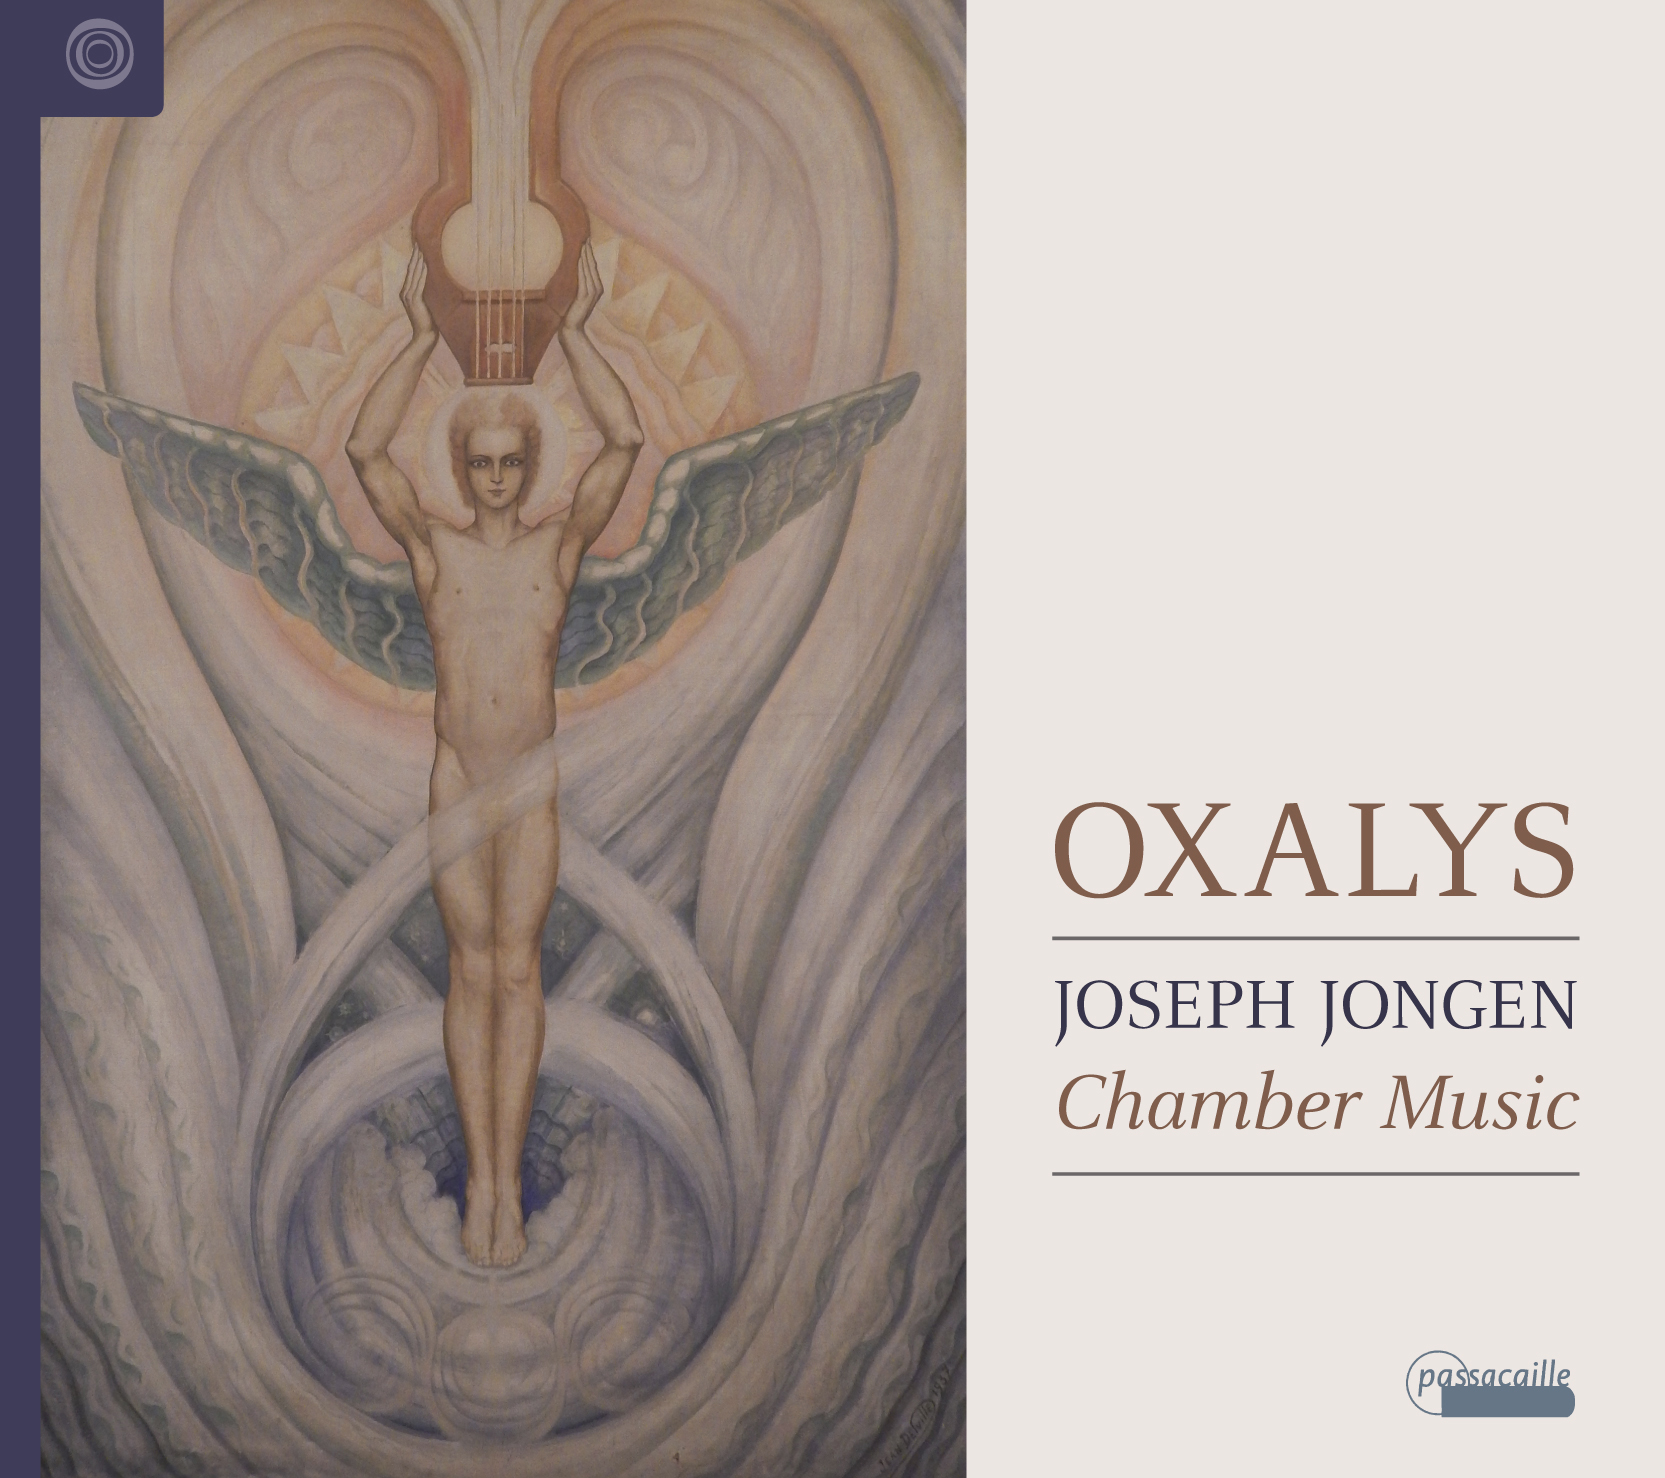 Chamber Music - Joseph Jongen - Oxalys